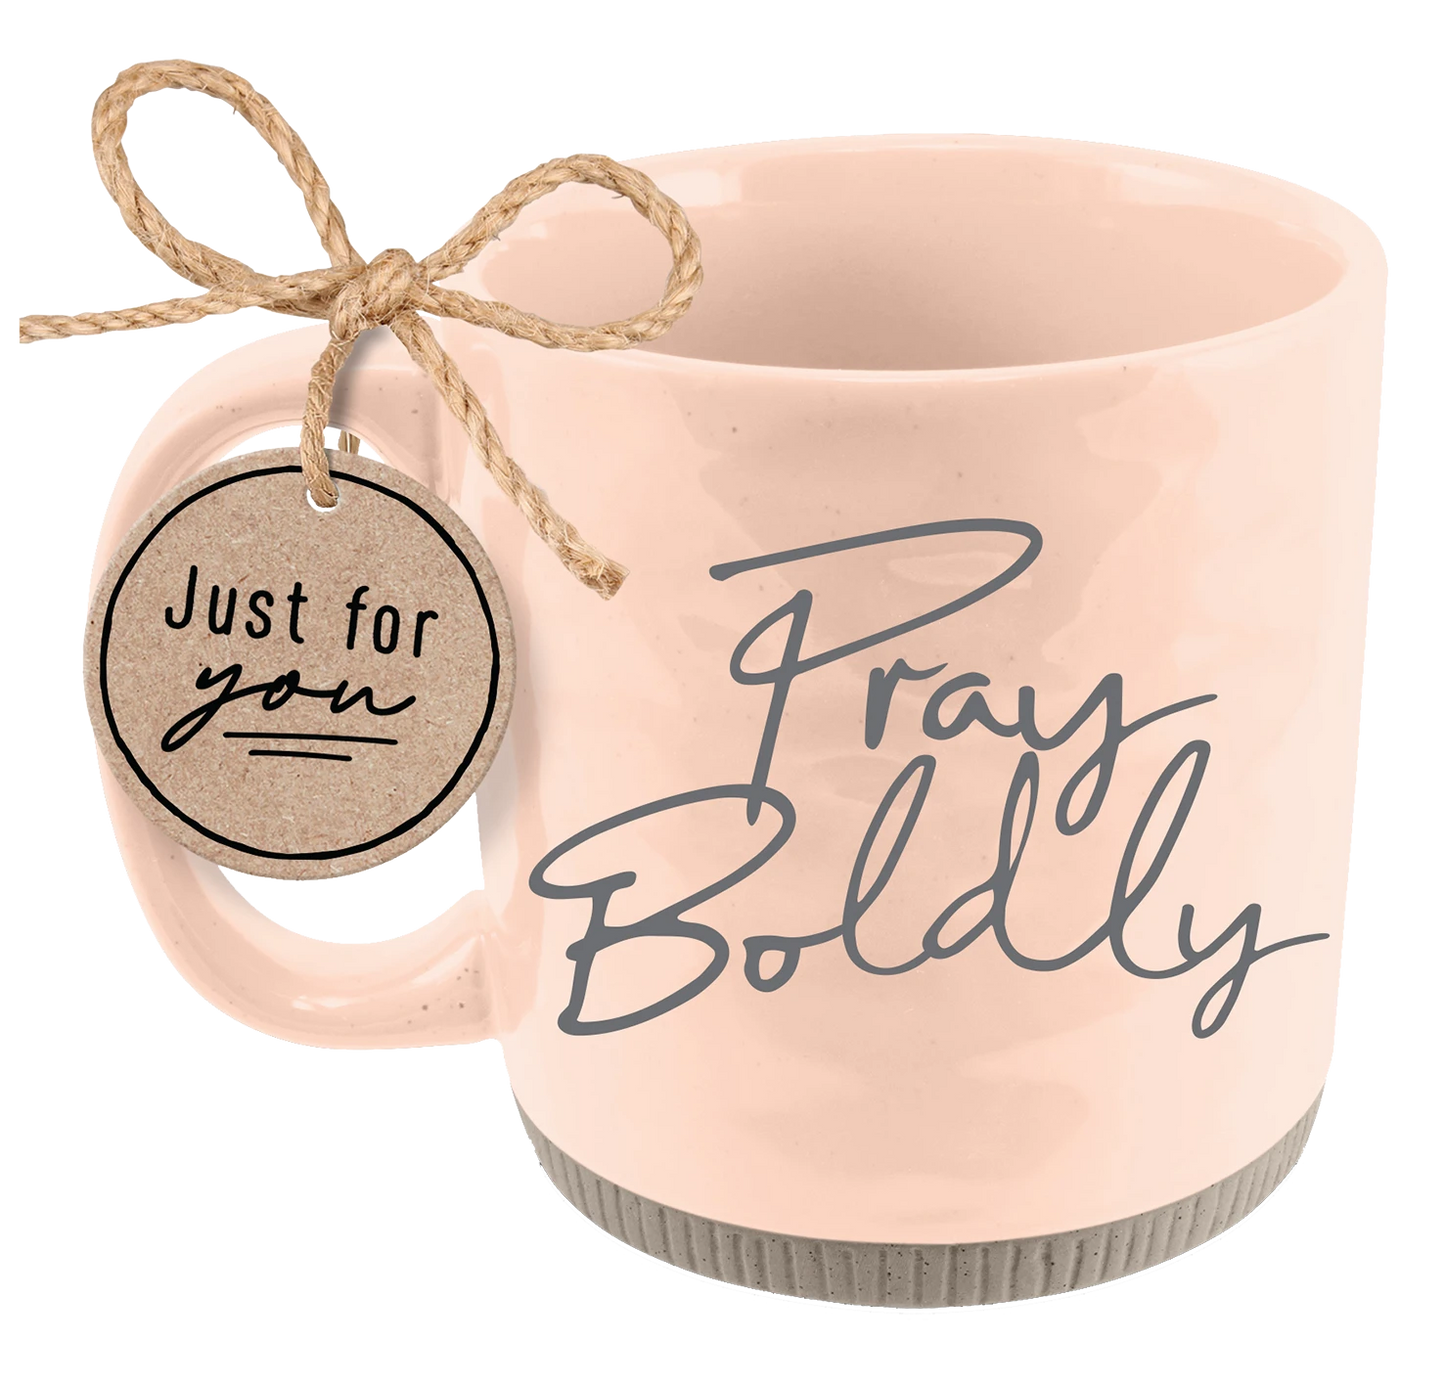 Pray Boldly - Pastel Apricot/White Ceramic Mug